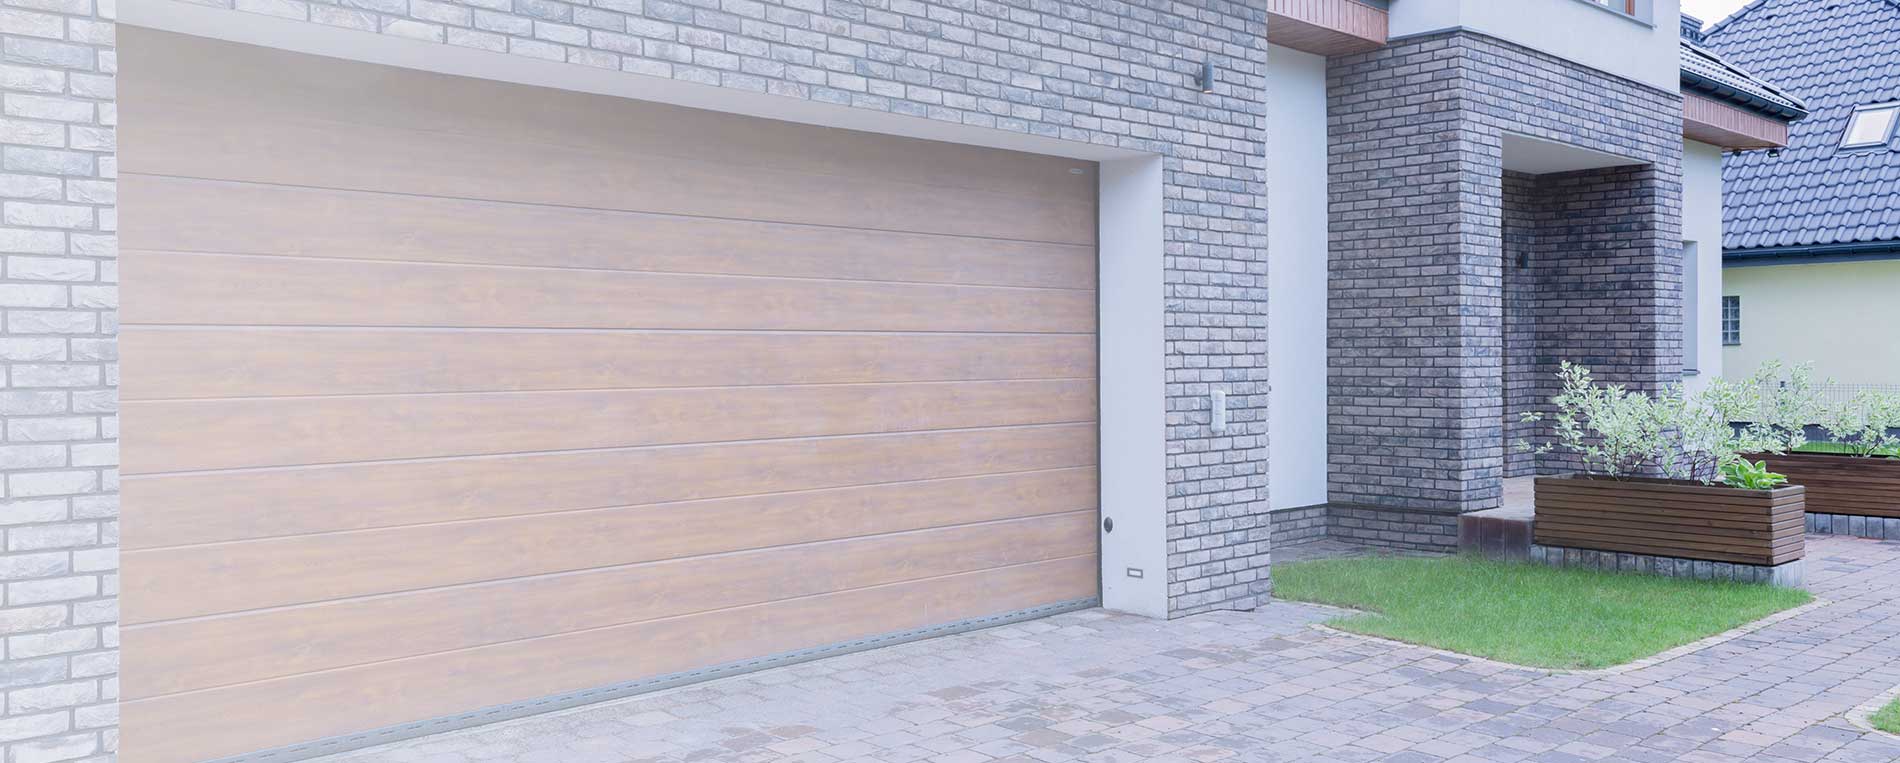 Why Are Fiberglass Garage Doors So Popular?